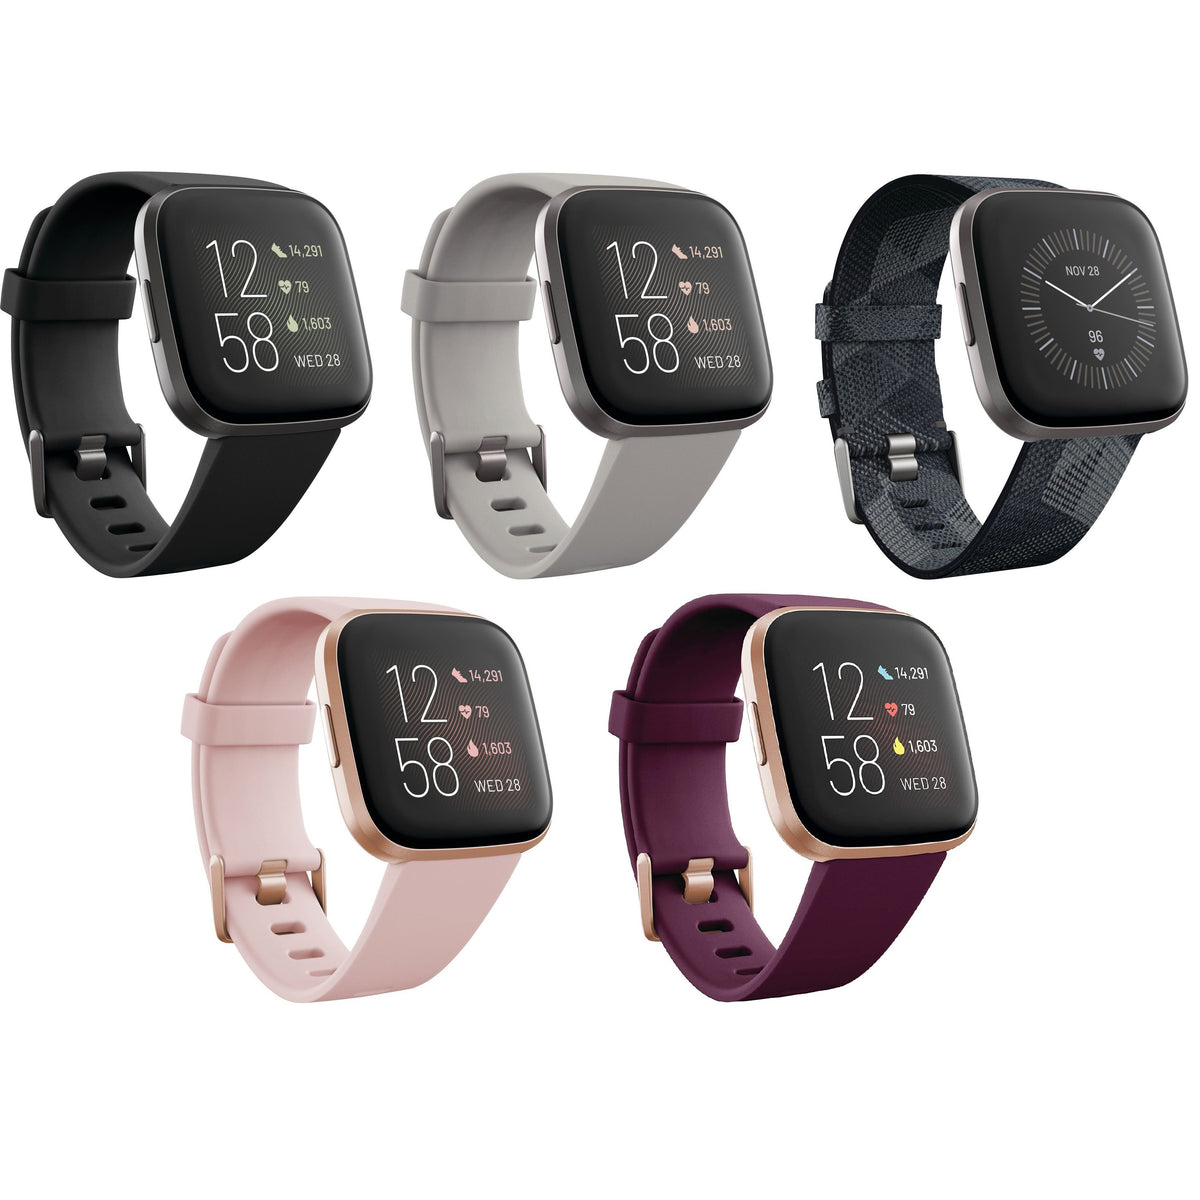 Fitbit Versa 2 Health & Fitness Smartwatch — Price Whack